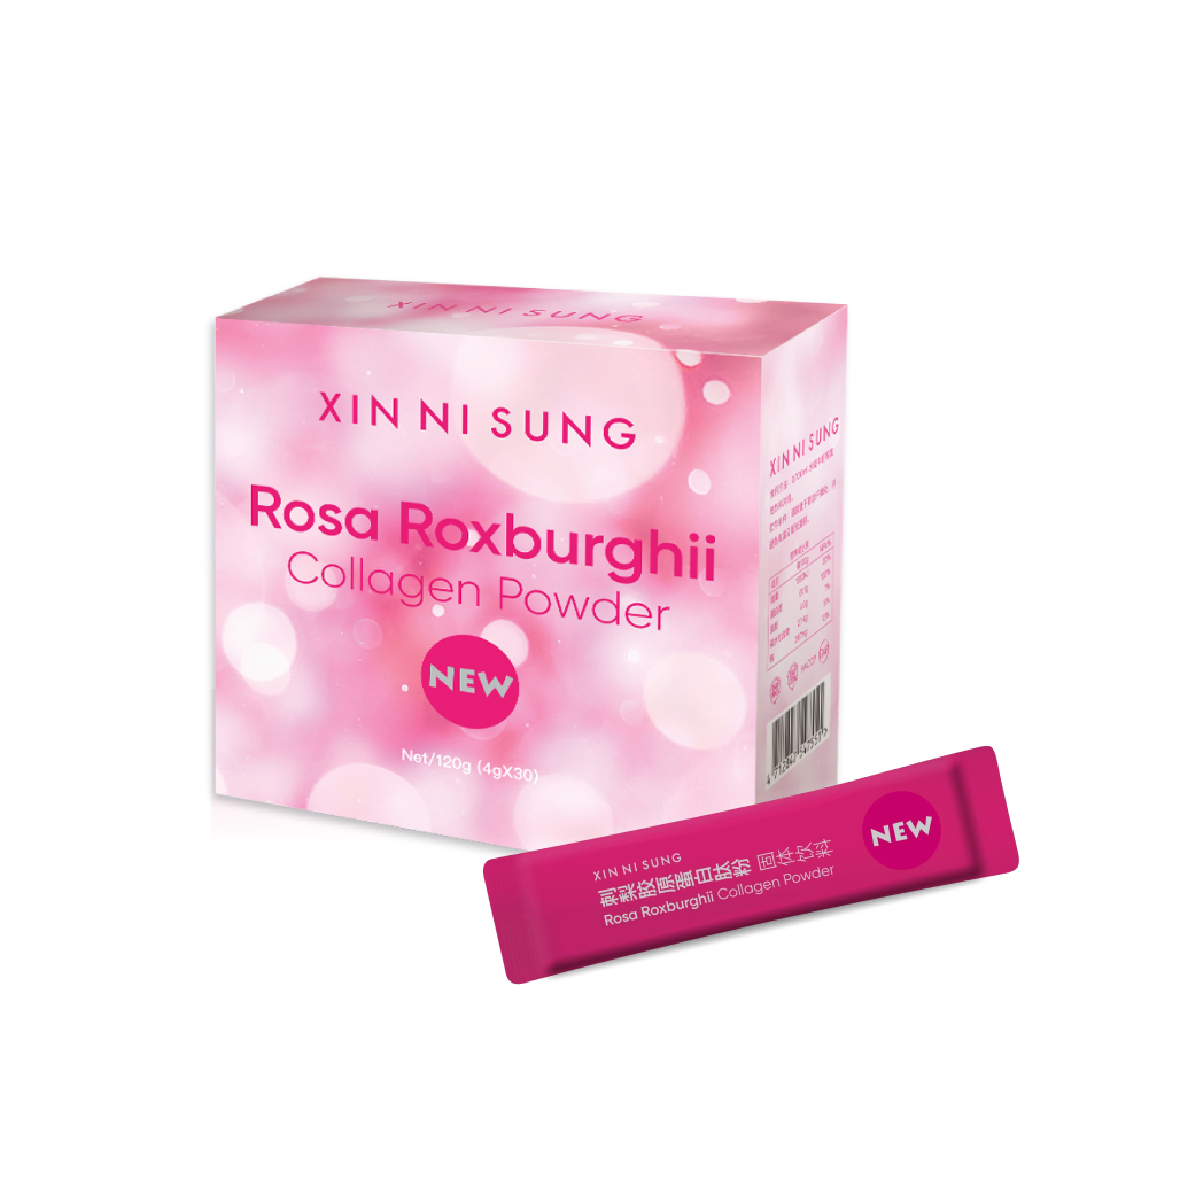 XIN NI SUNG Rosa Roxburghii Collagen Powder 刺梨胶原蛋白肽粉 [4g x 30]